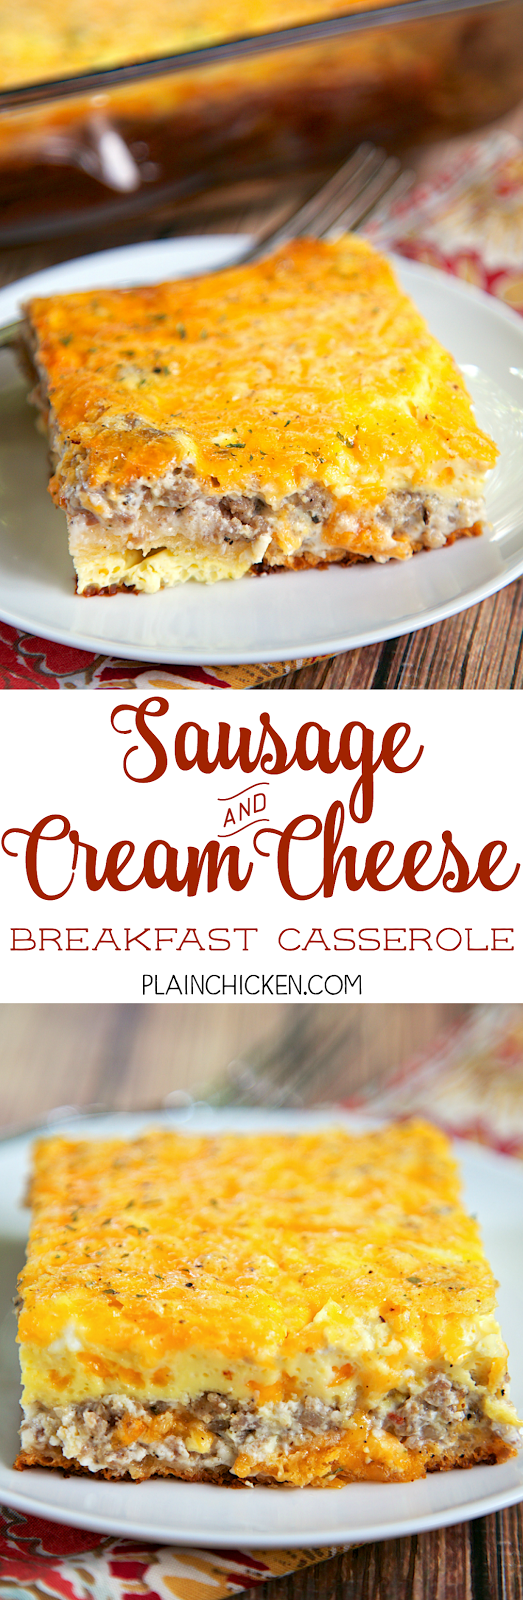 Sausage and Cream Cheese Breakfast Casserole